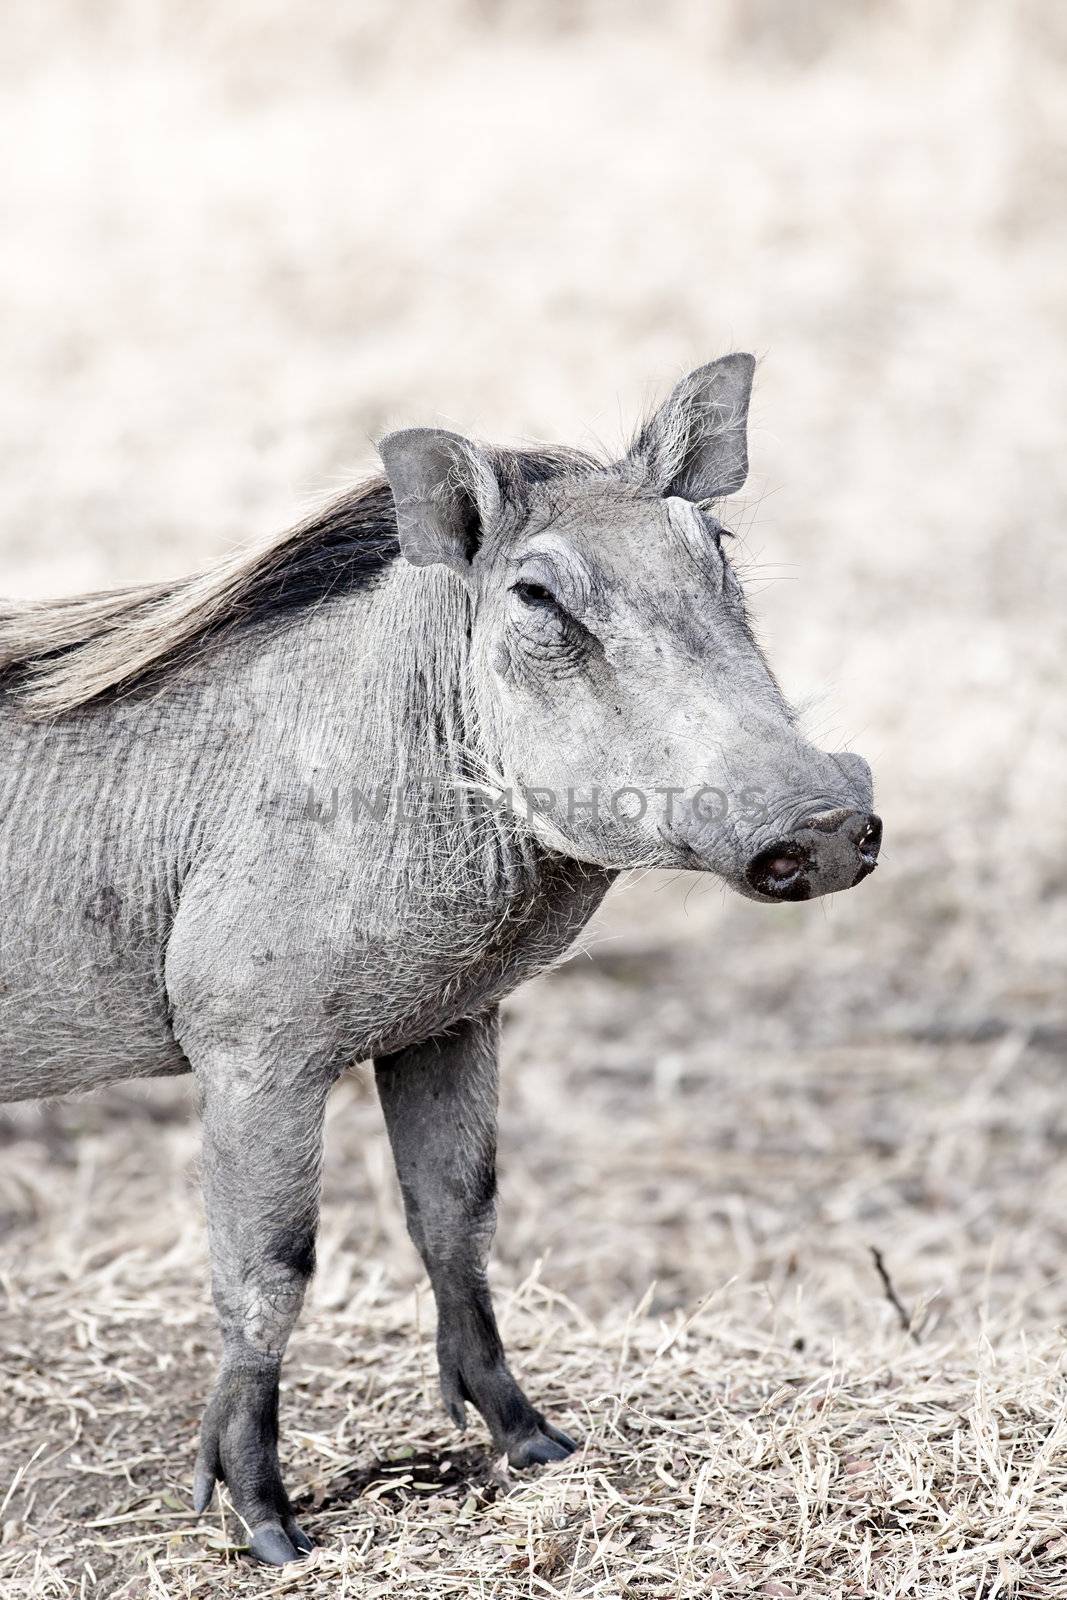 Wild warthog in the dry African savannah